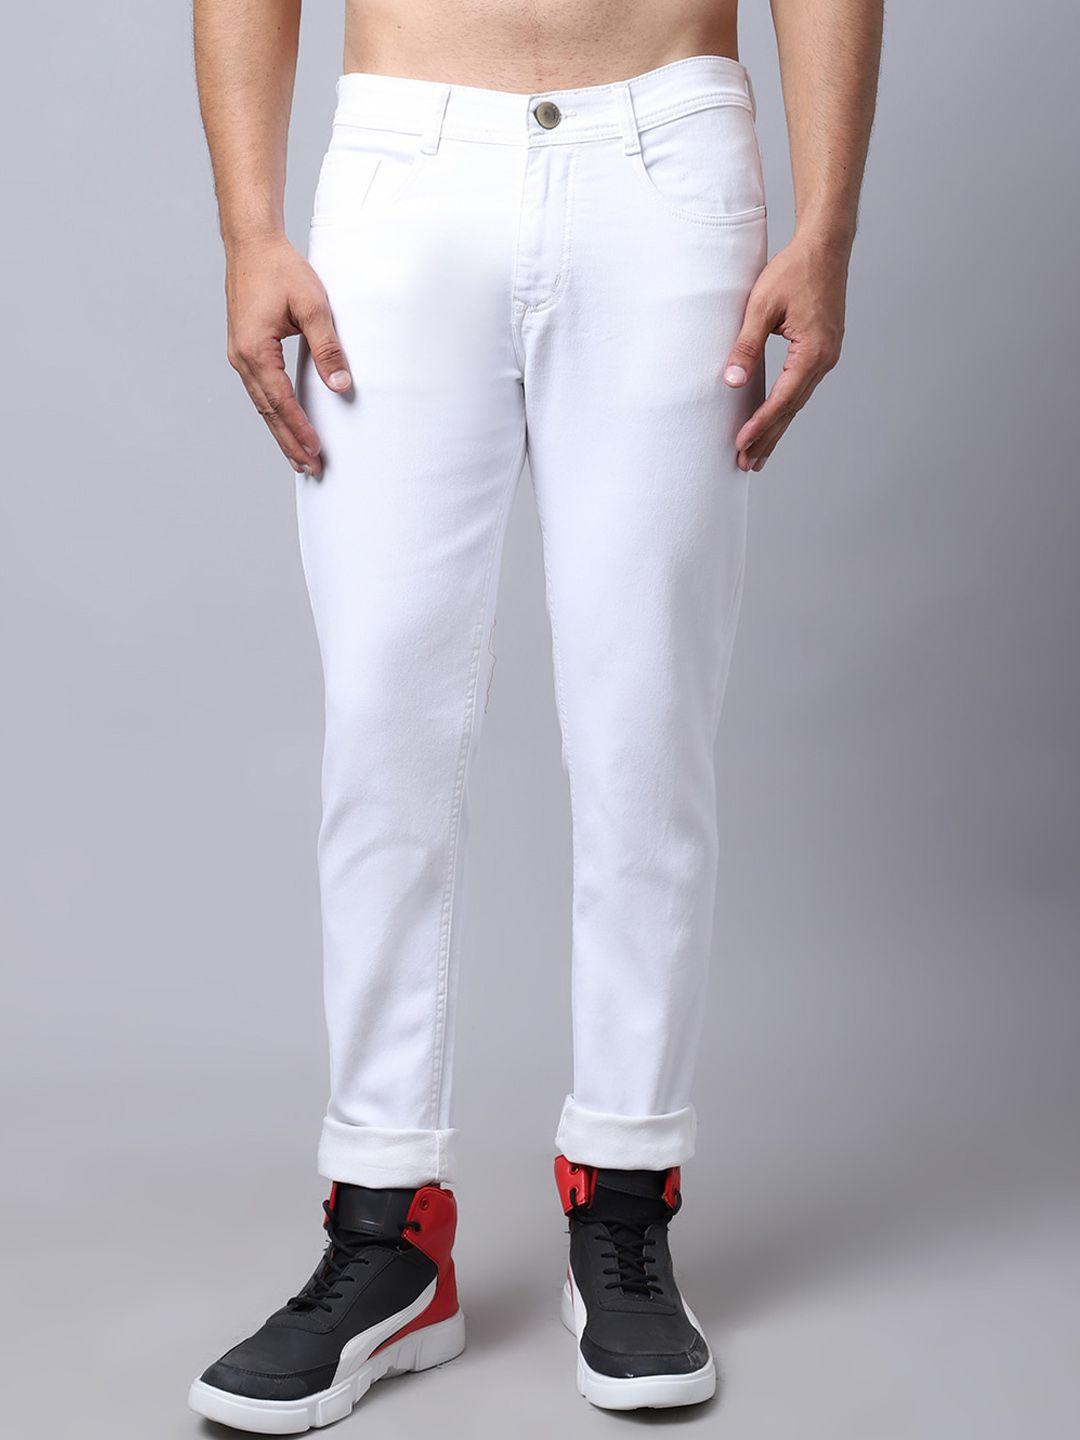 provogue-men-mid-rise-light-shade-cotton-jeans